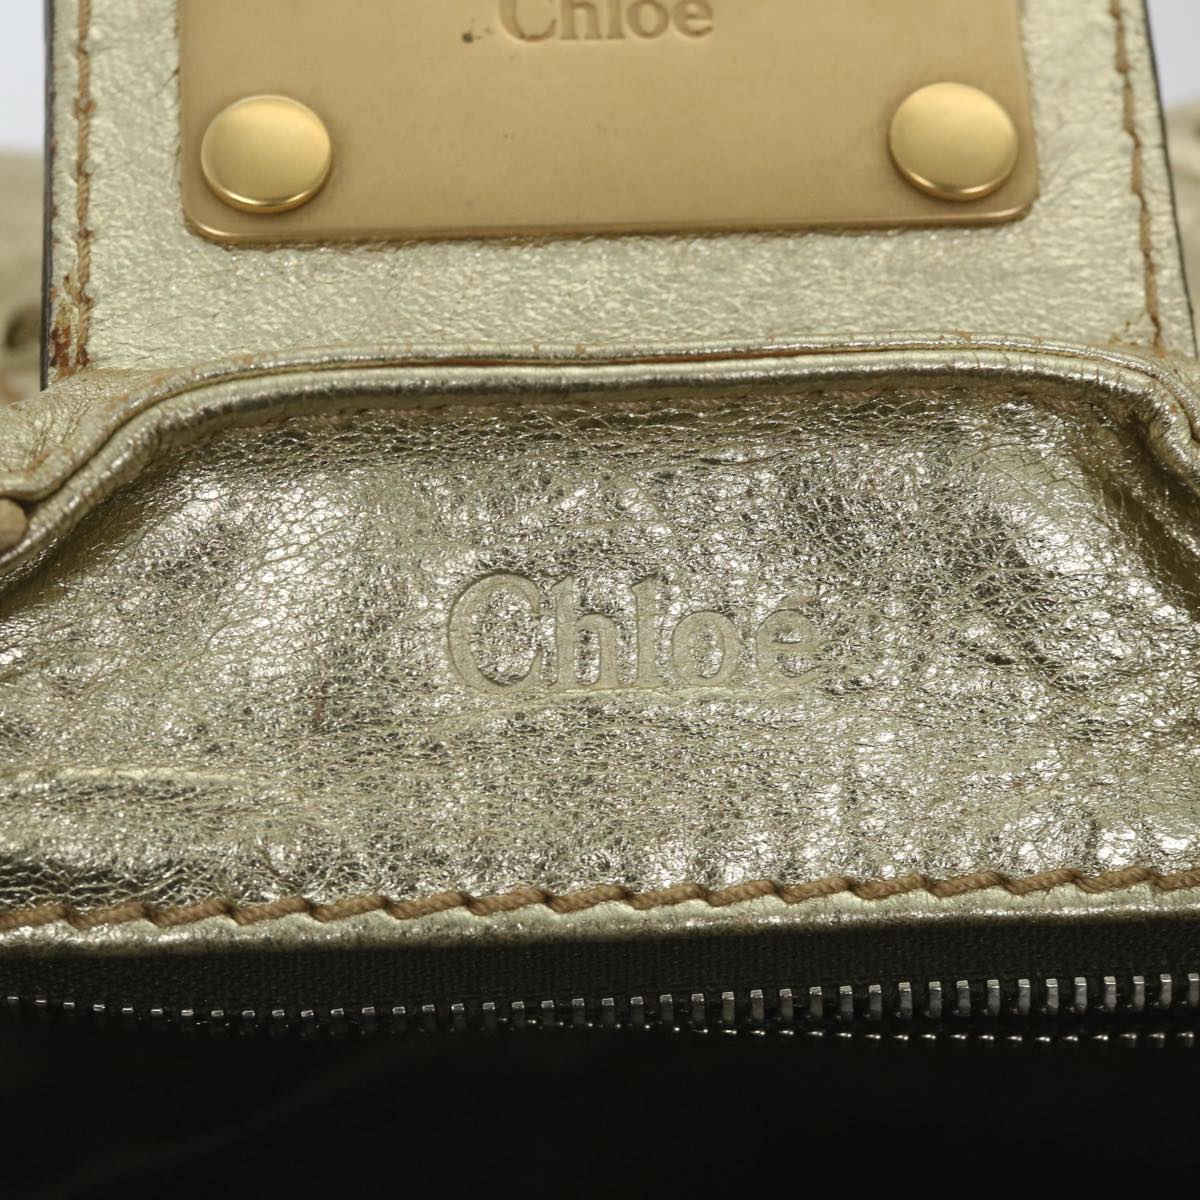 Chloe Paddington Hand Bag Leather Gold Tone 01 10 51 5811 Auth 59696